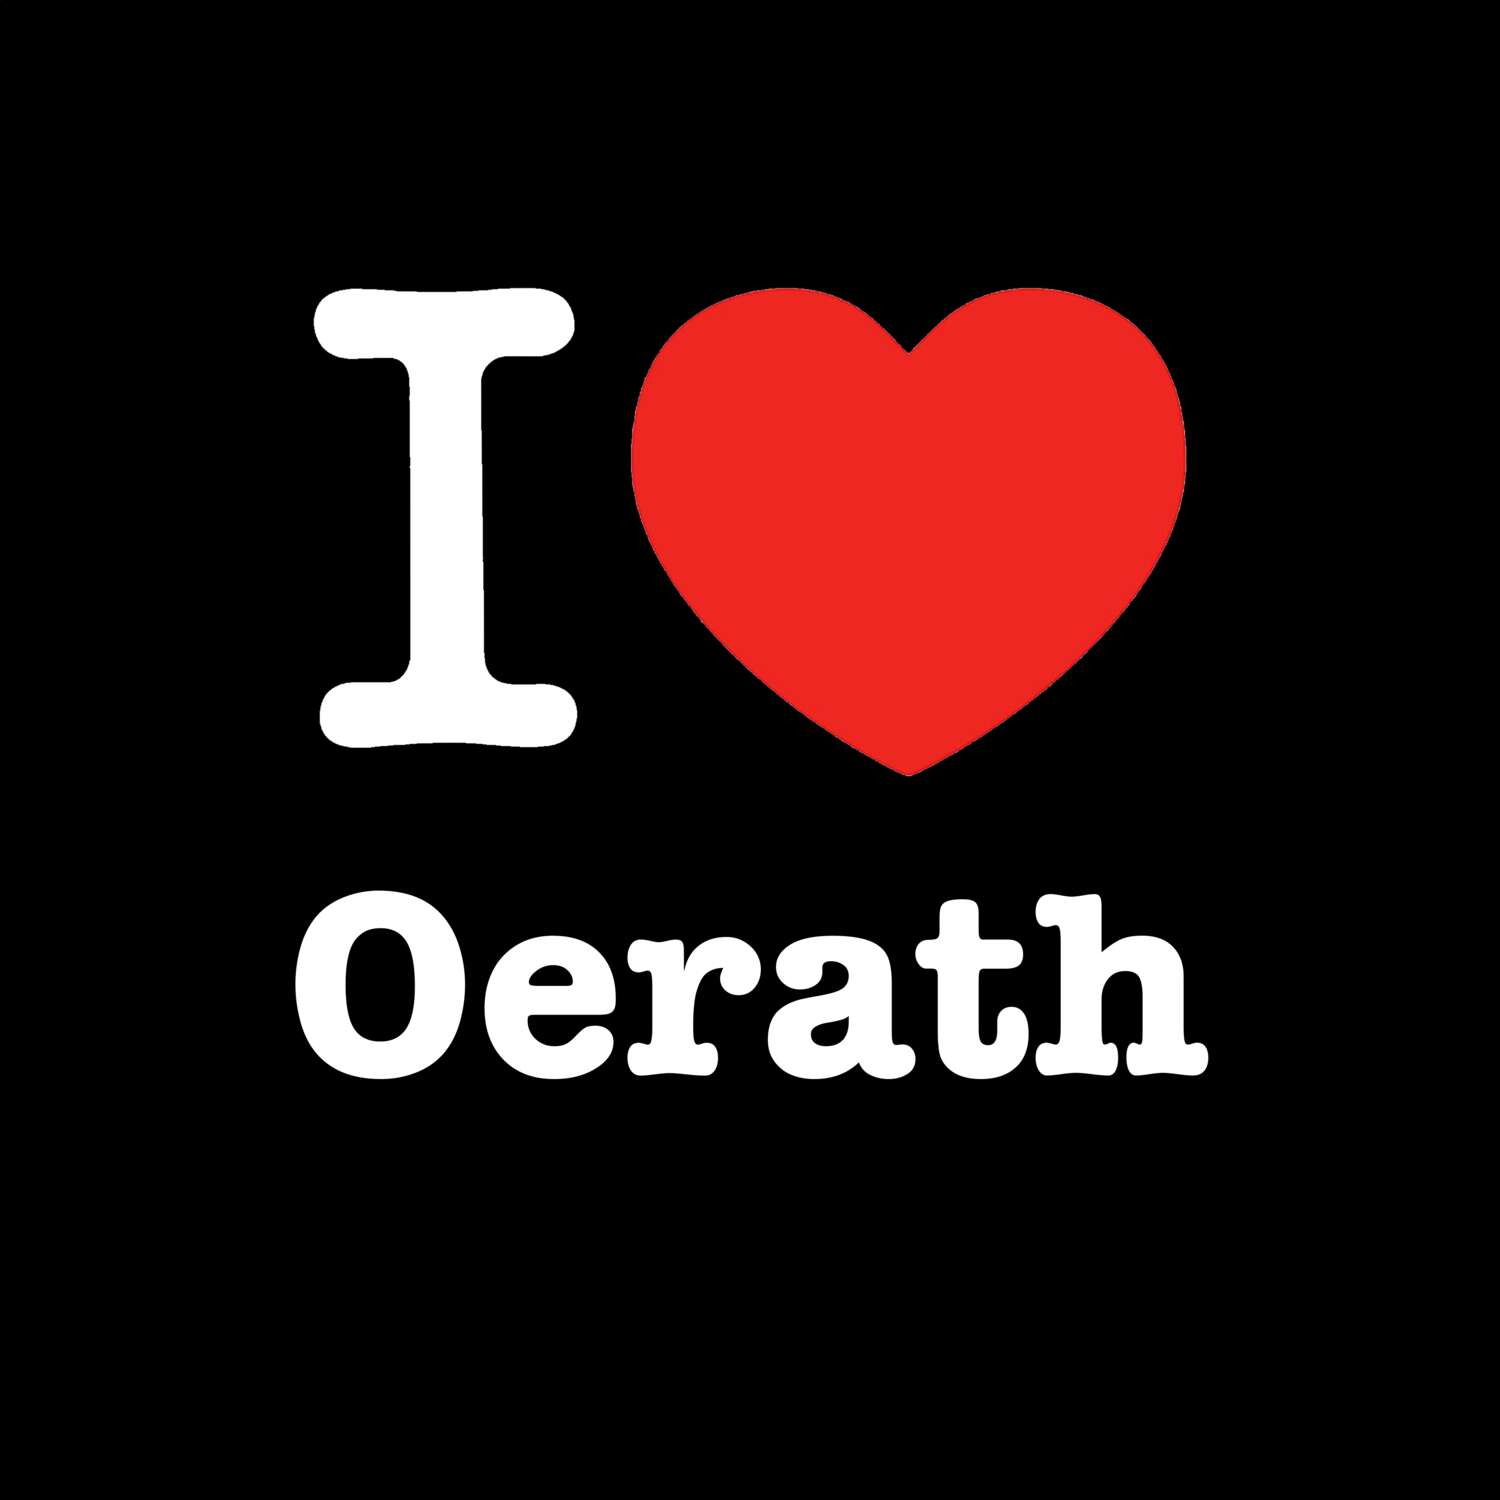 Oerath T-Shirt »I love«